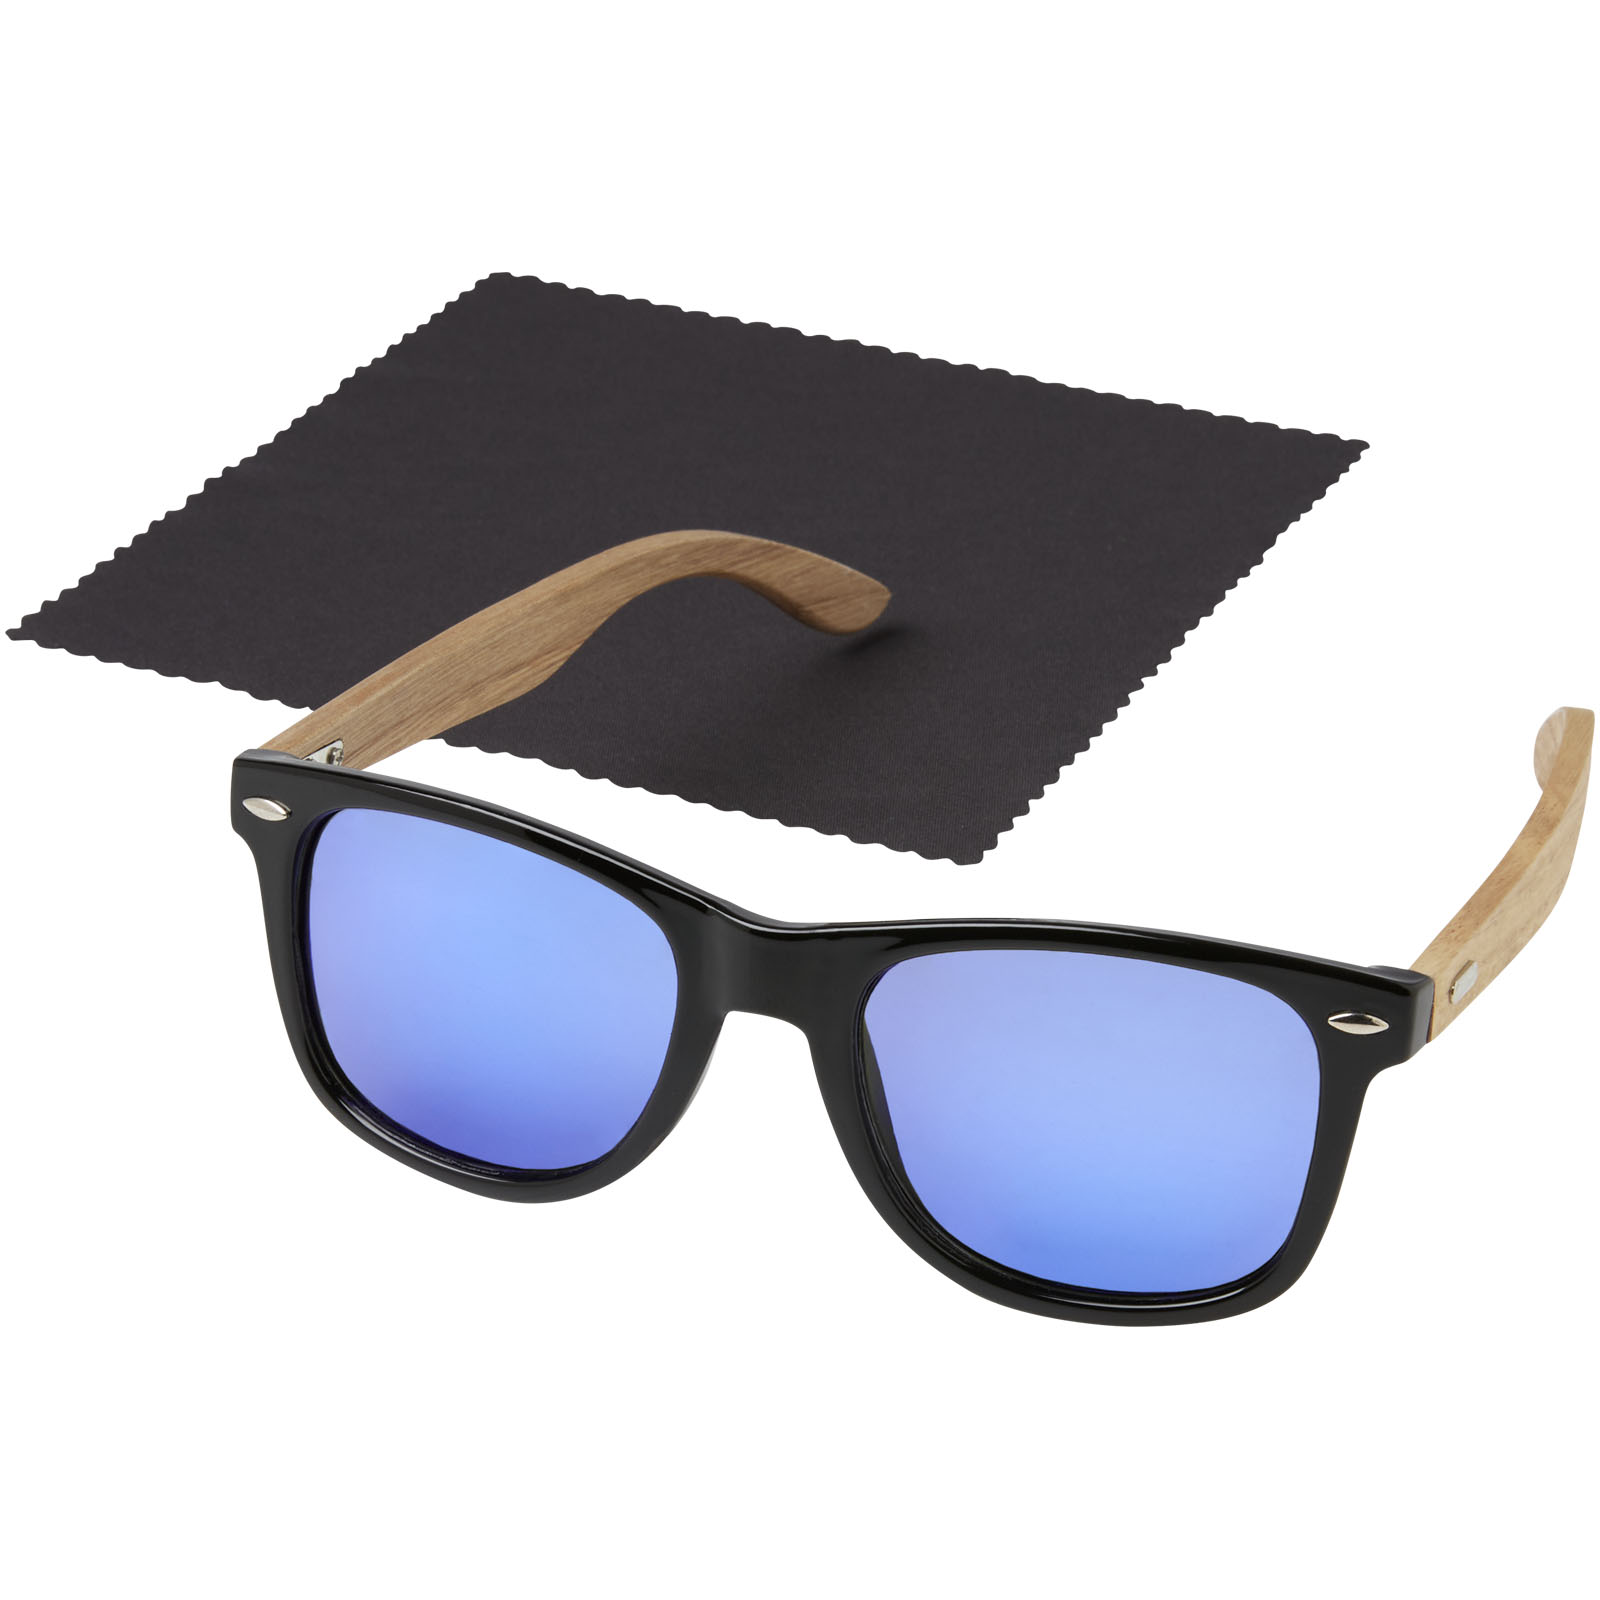 Advertising Sunglasses - Hiru rPET/wood mirrored polarized sunglasses in gift box - 3